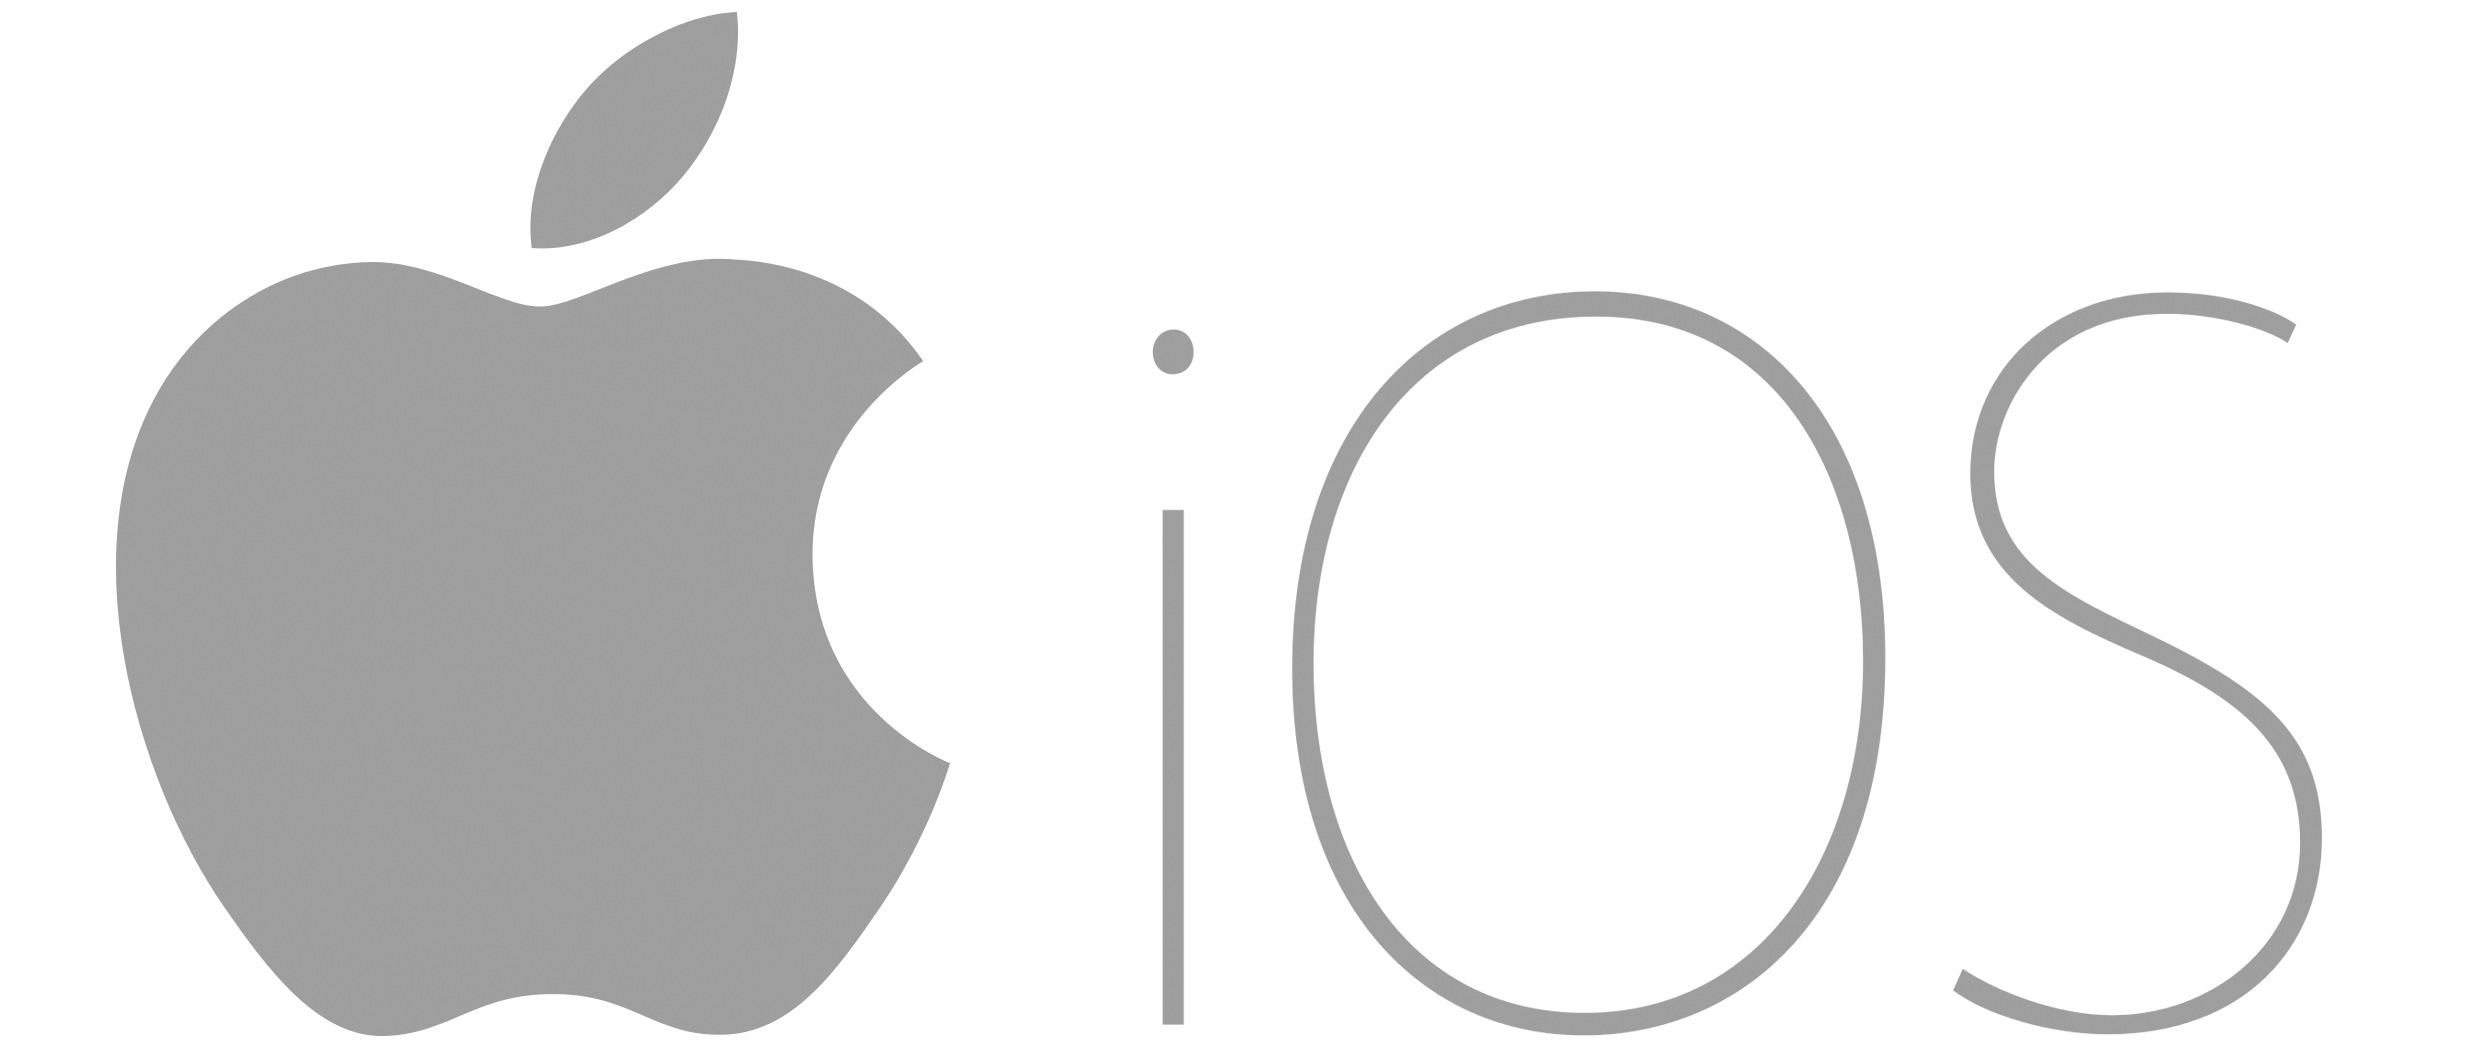 Apple iOS Logo - Apple Ios Logo Png Images